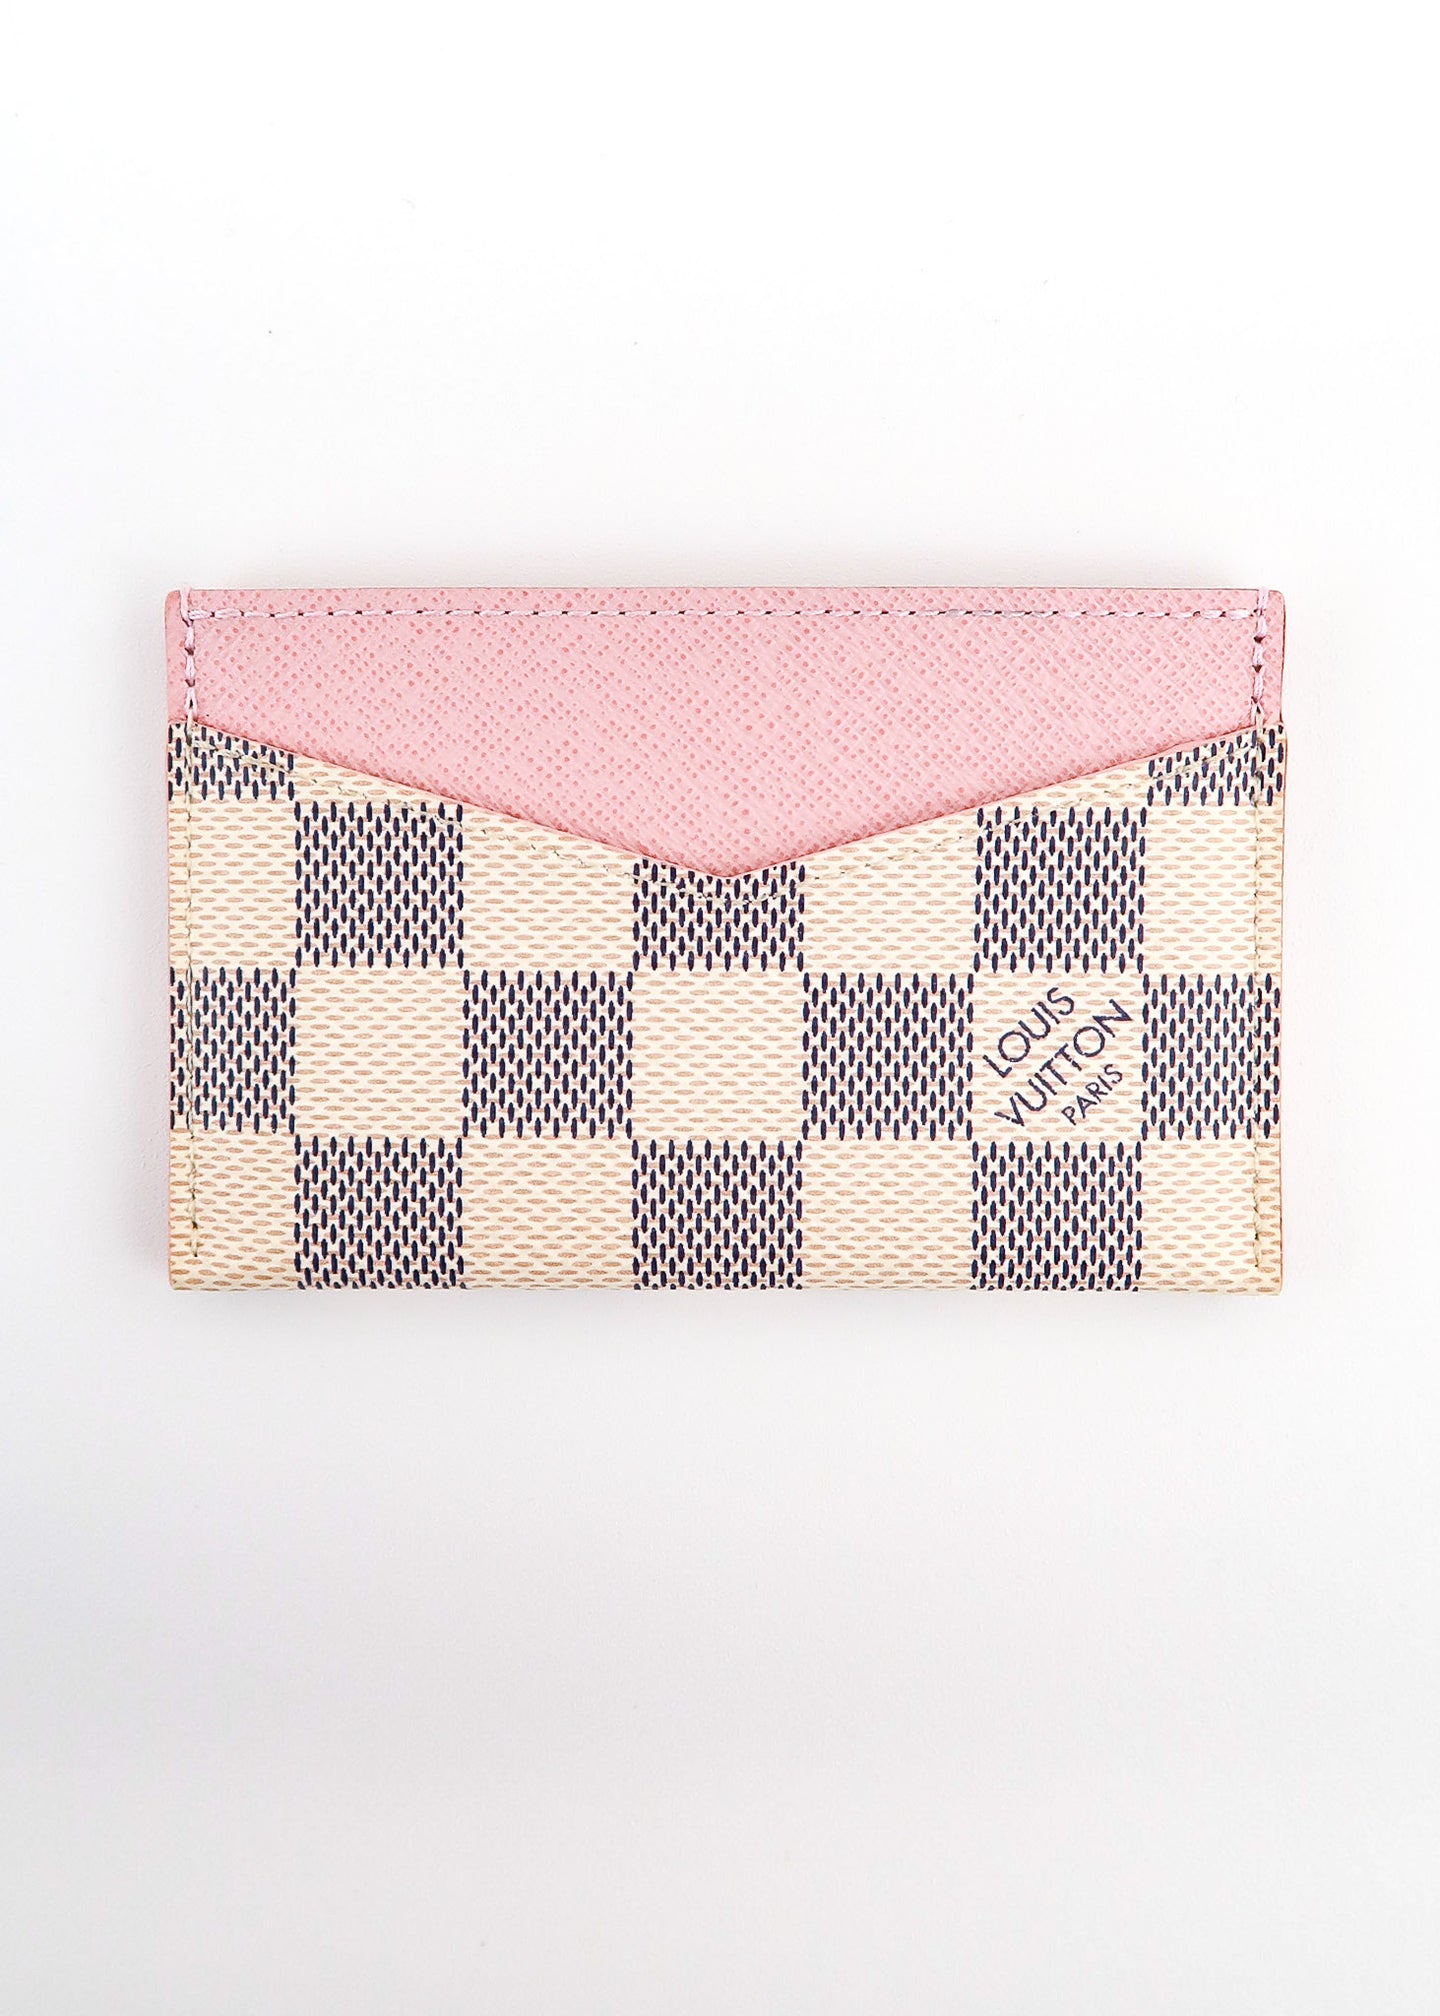 Louis Vuitton Damier Azur Studded Card Holder Case White Pink